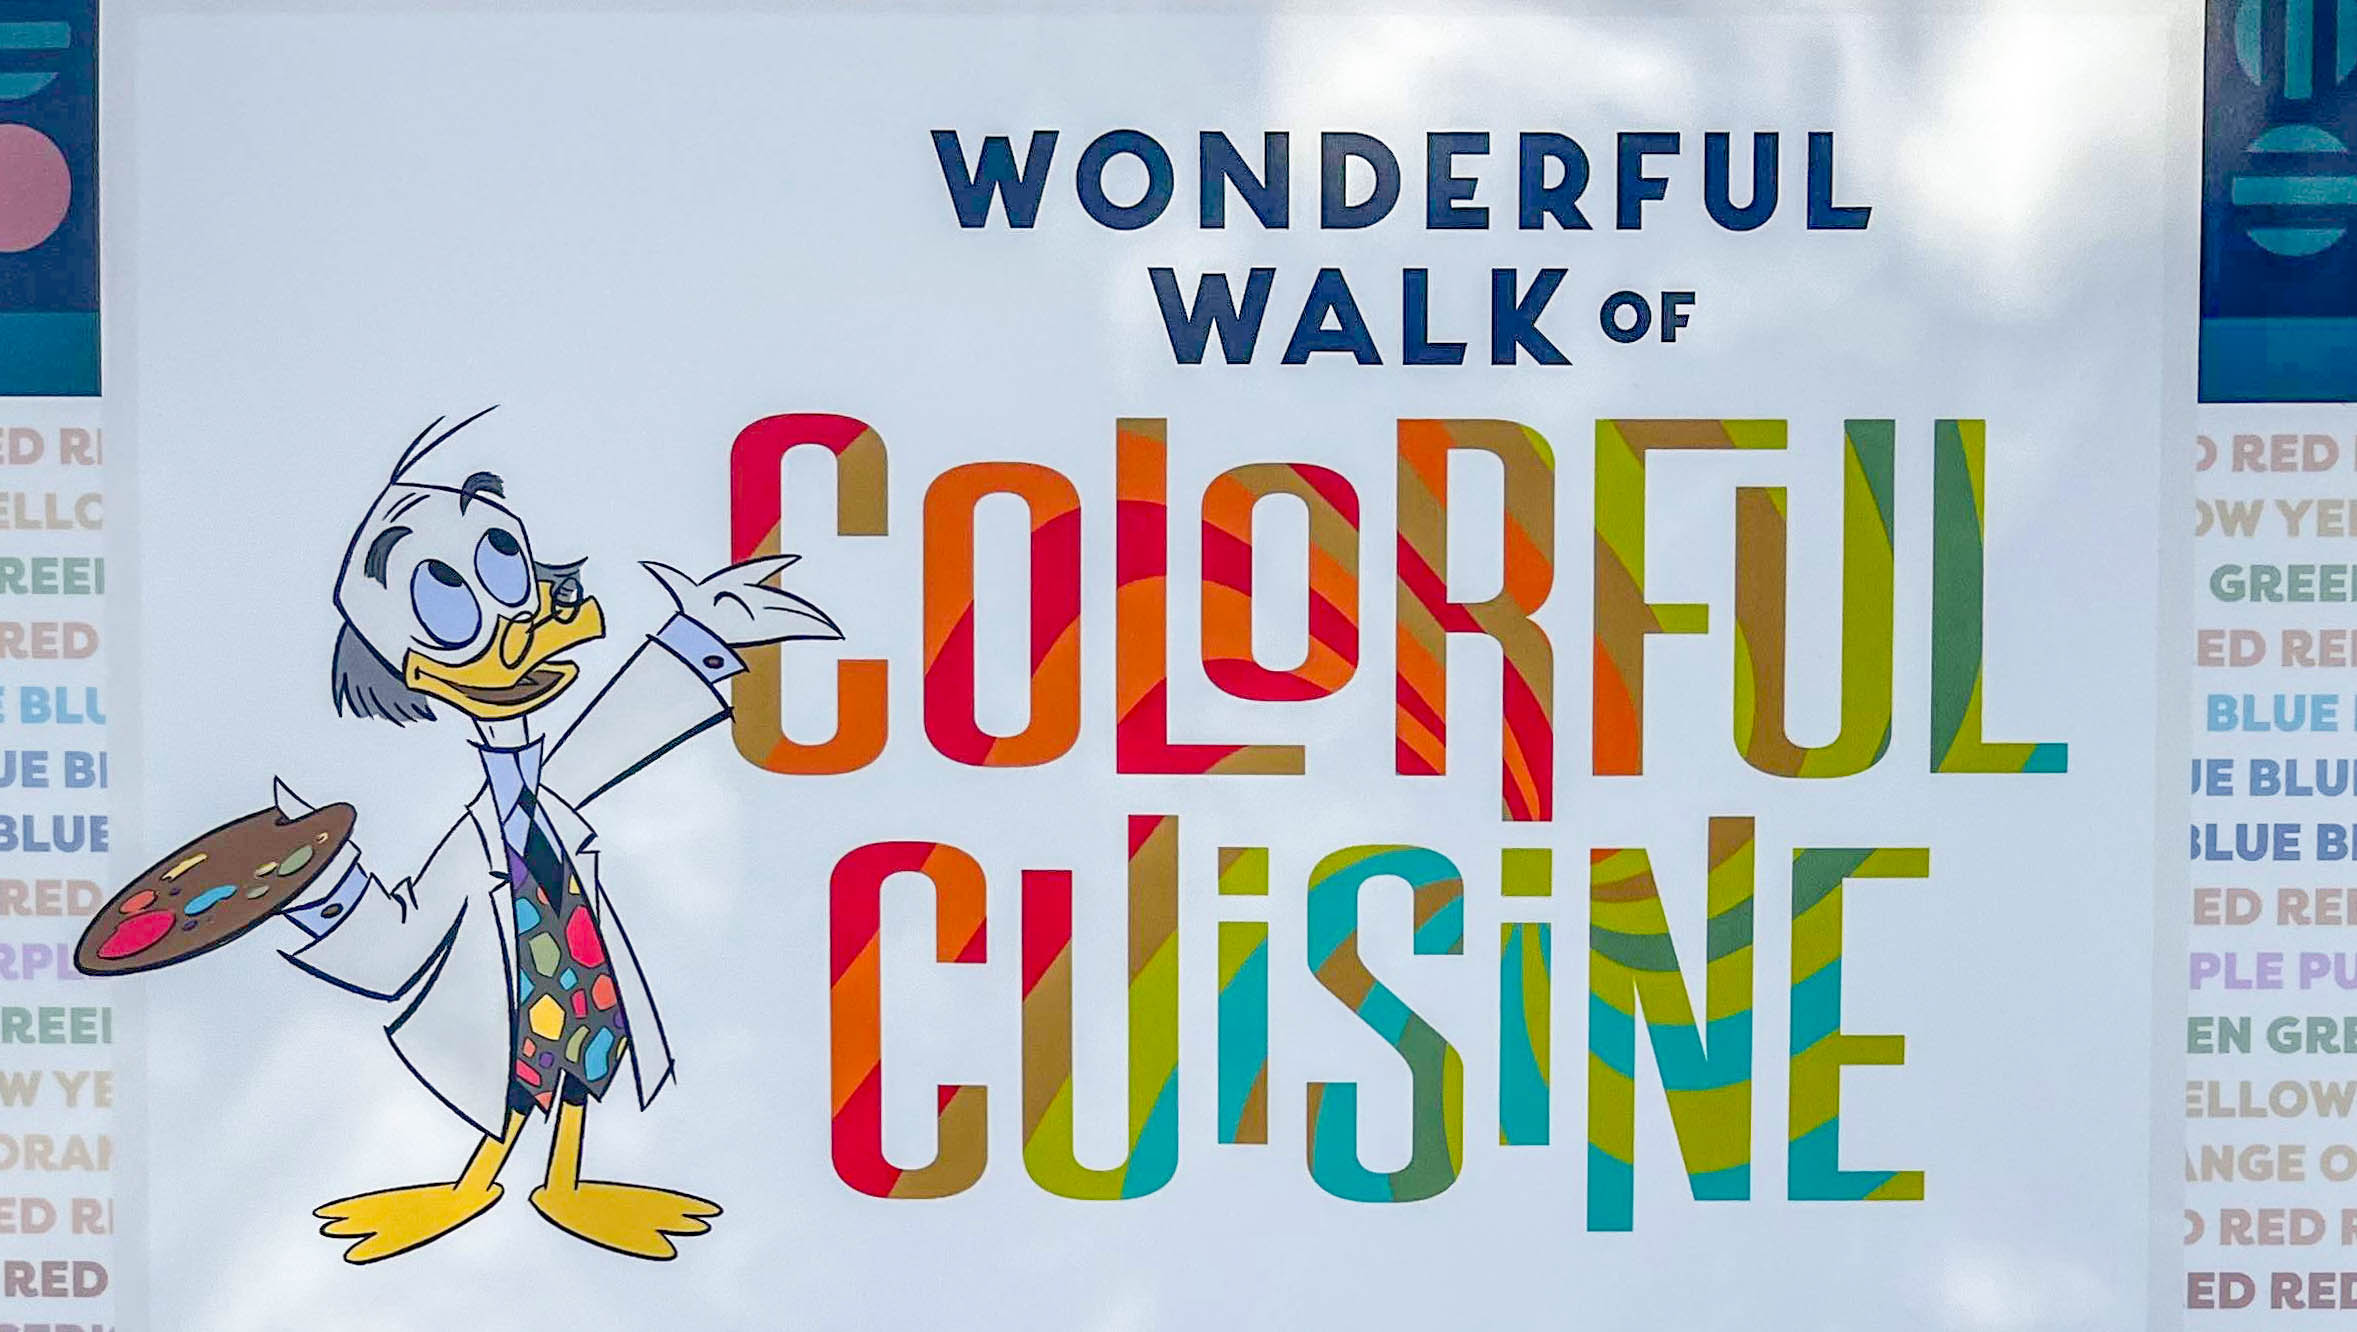 Wonderful Walk of Colorful Cuisine